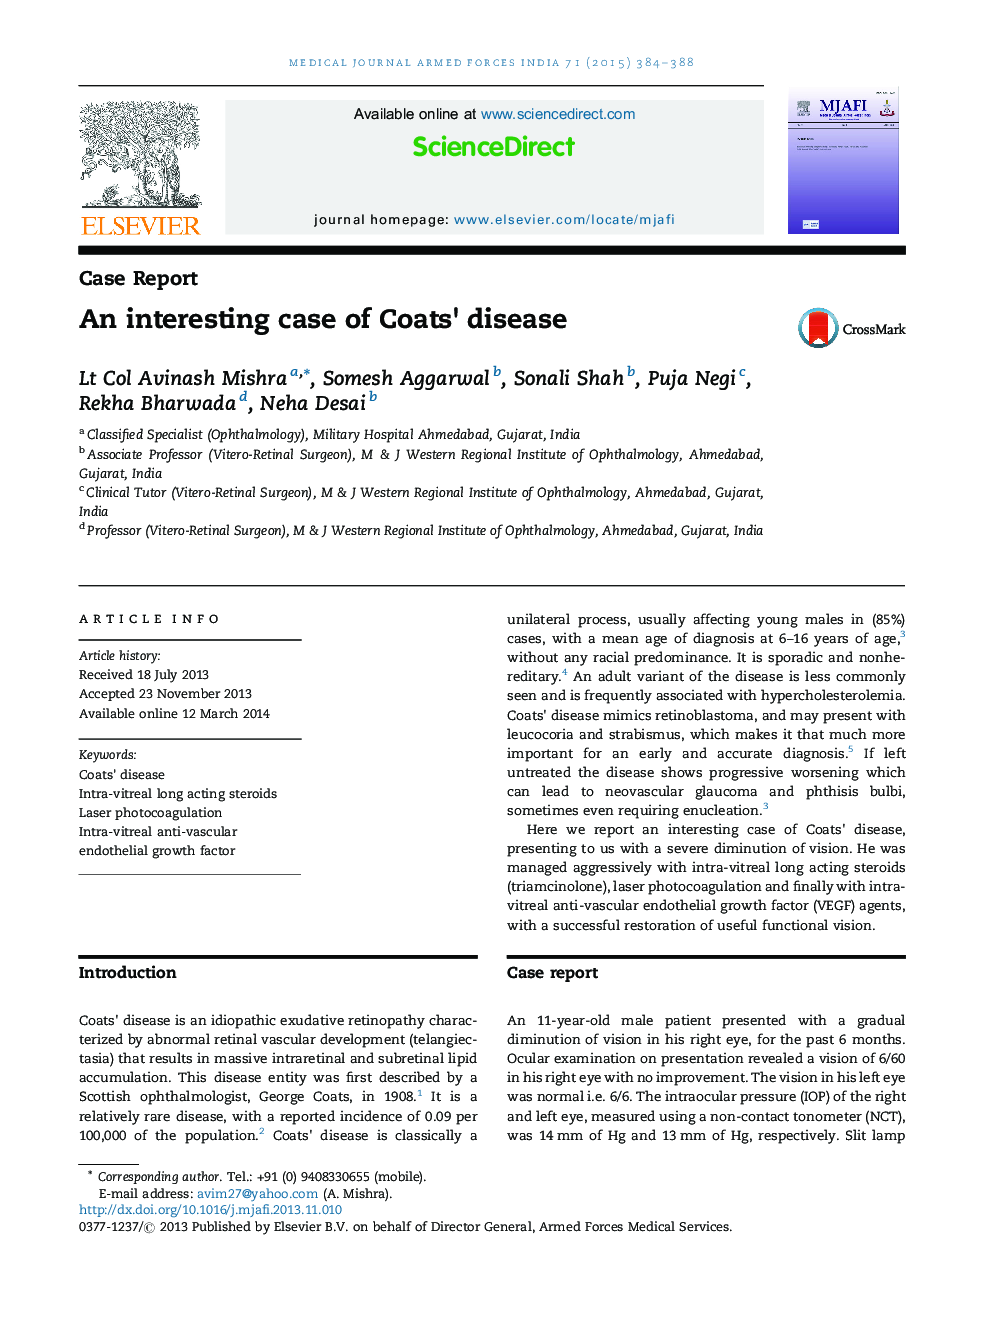 An interesting case of Coats' disease